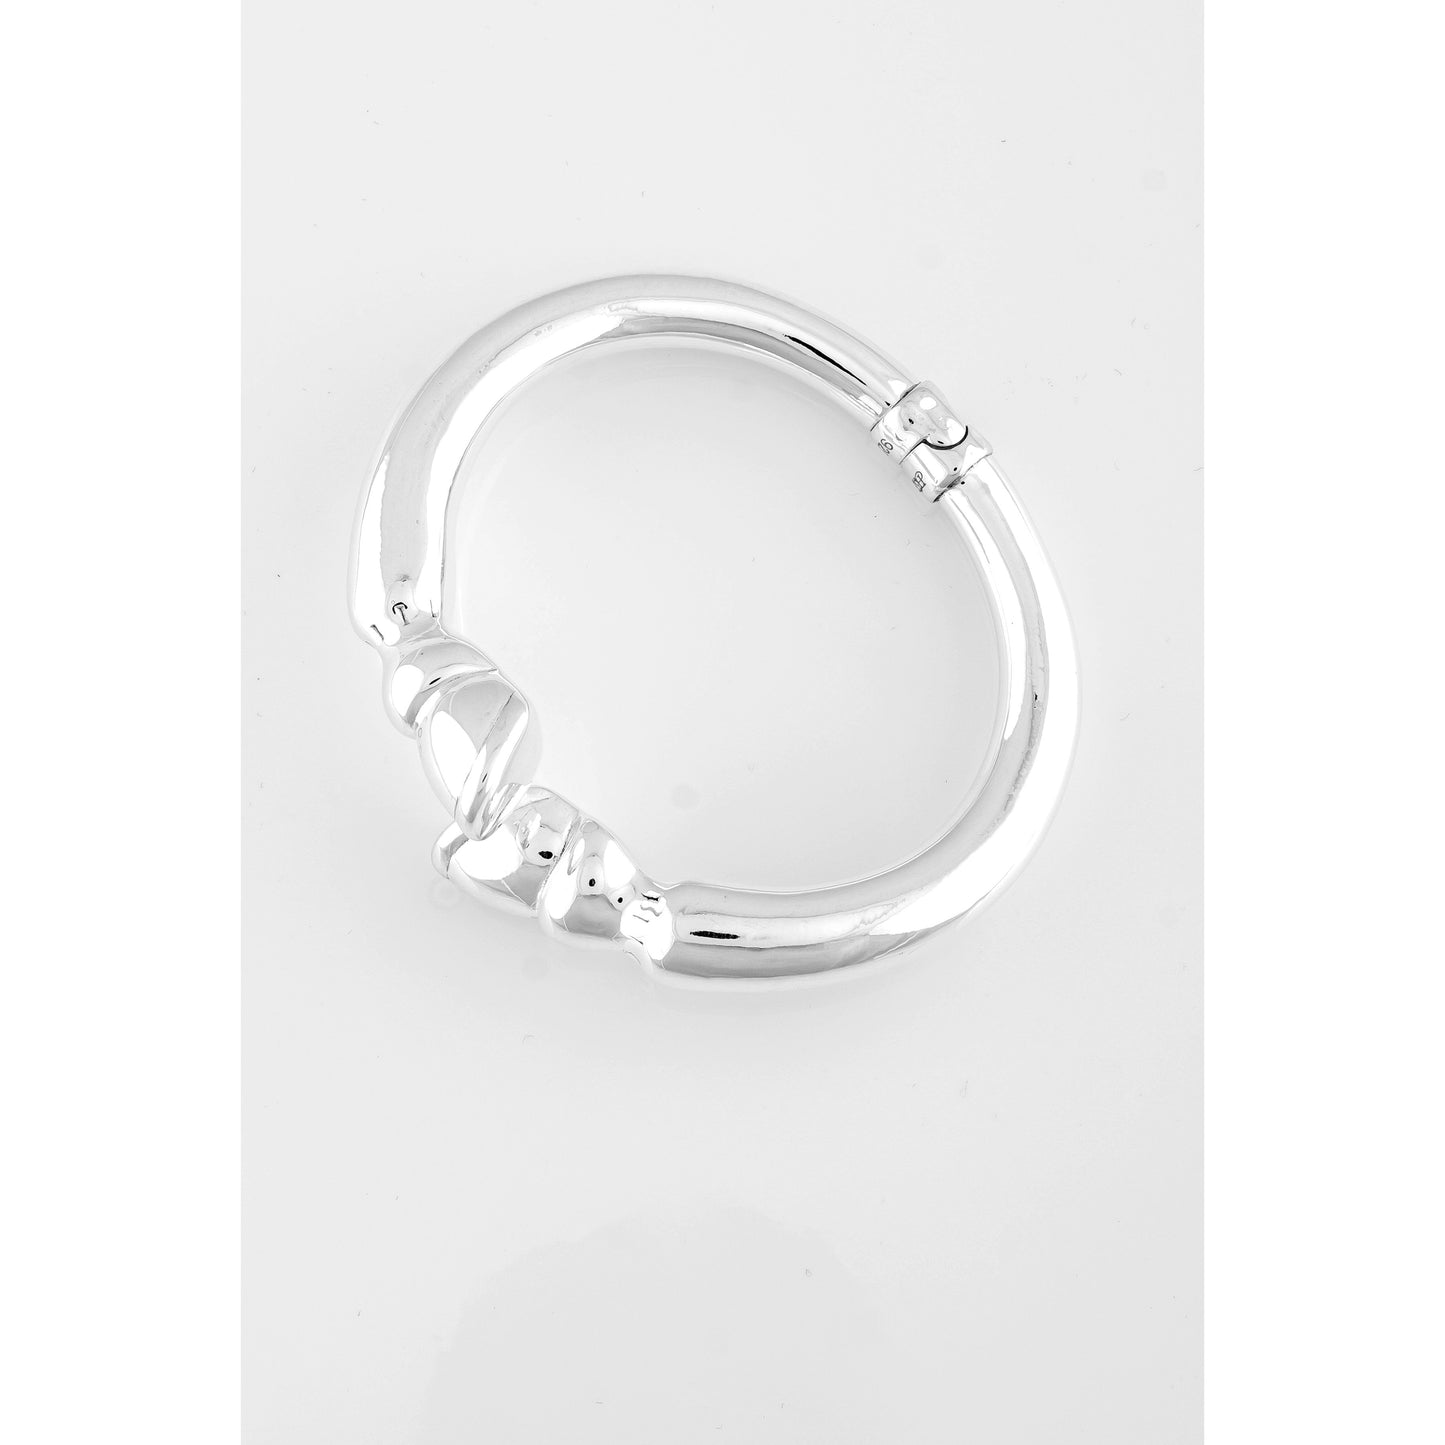 Silver circular hinged segment ring.